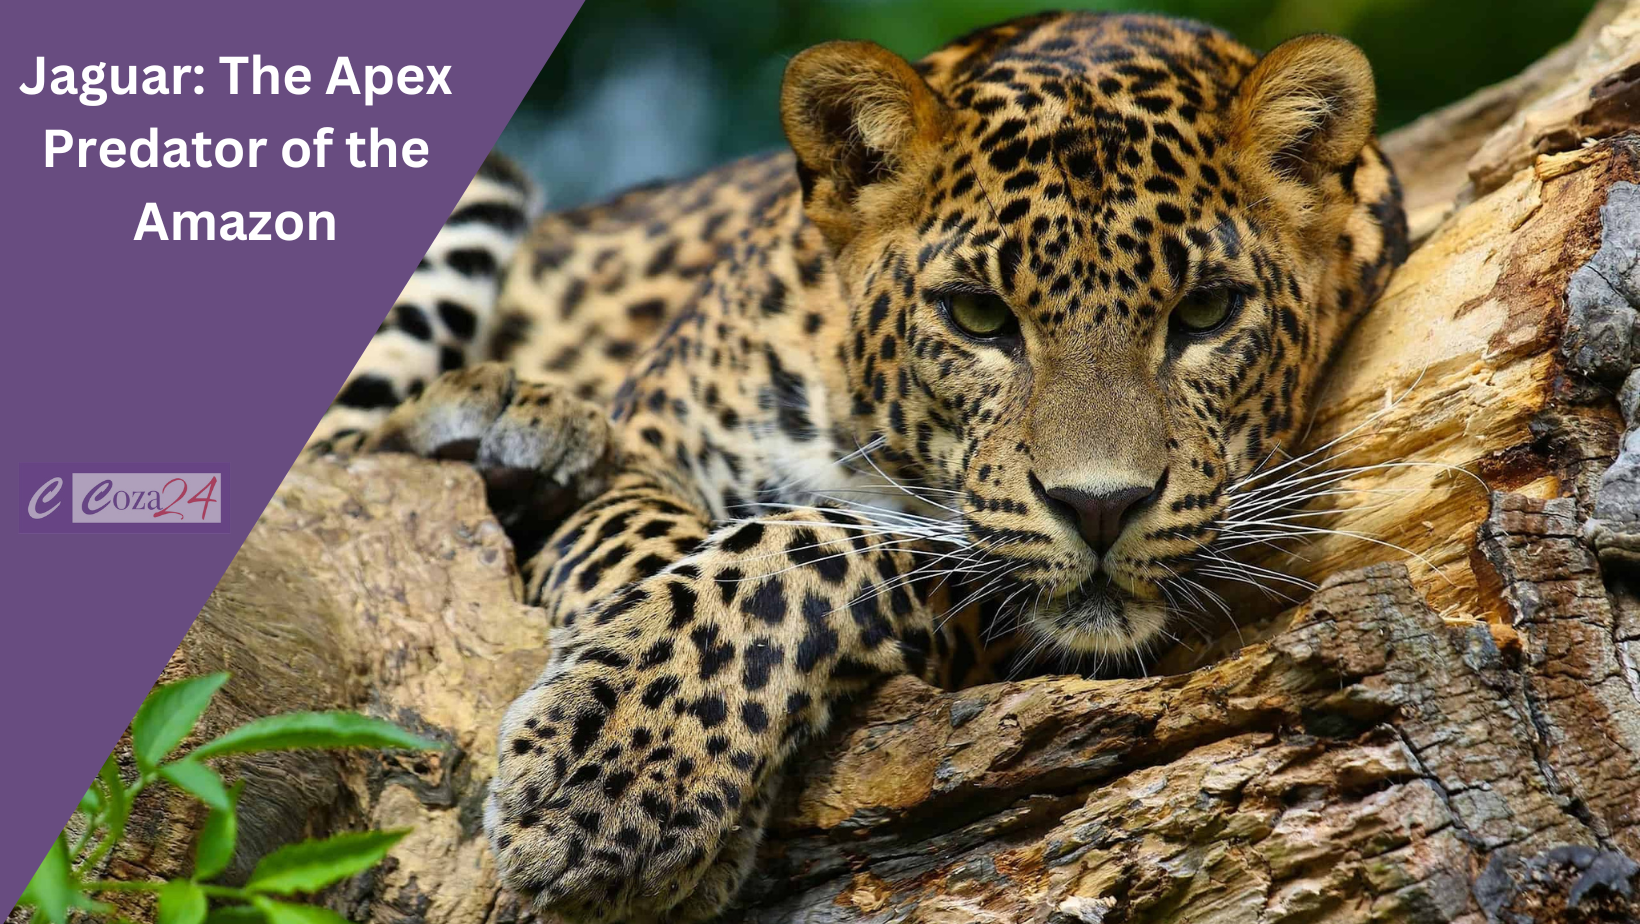 Jaguar: The Apex Predator of the Amazon